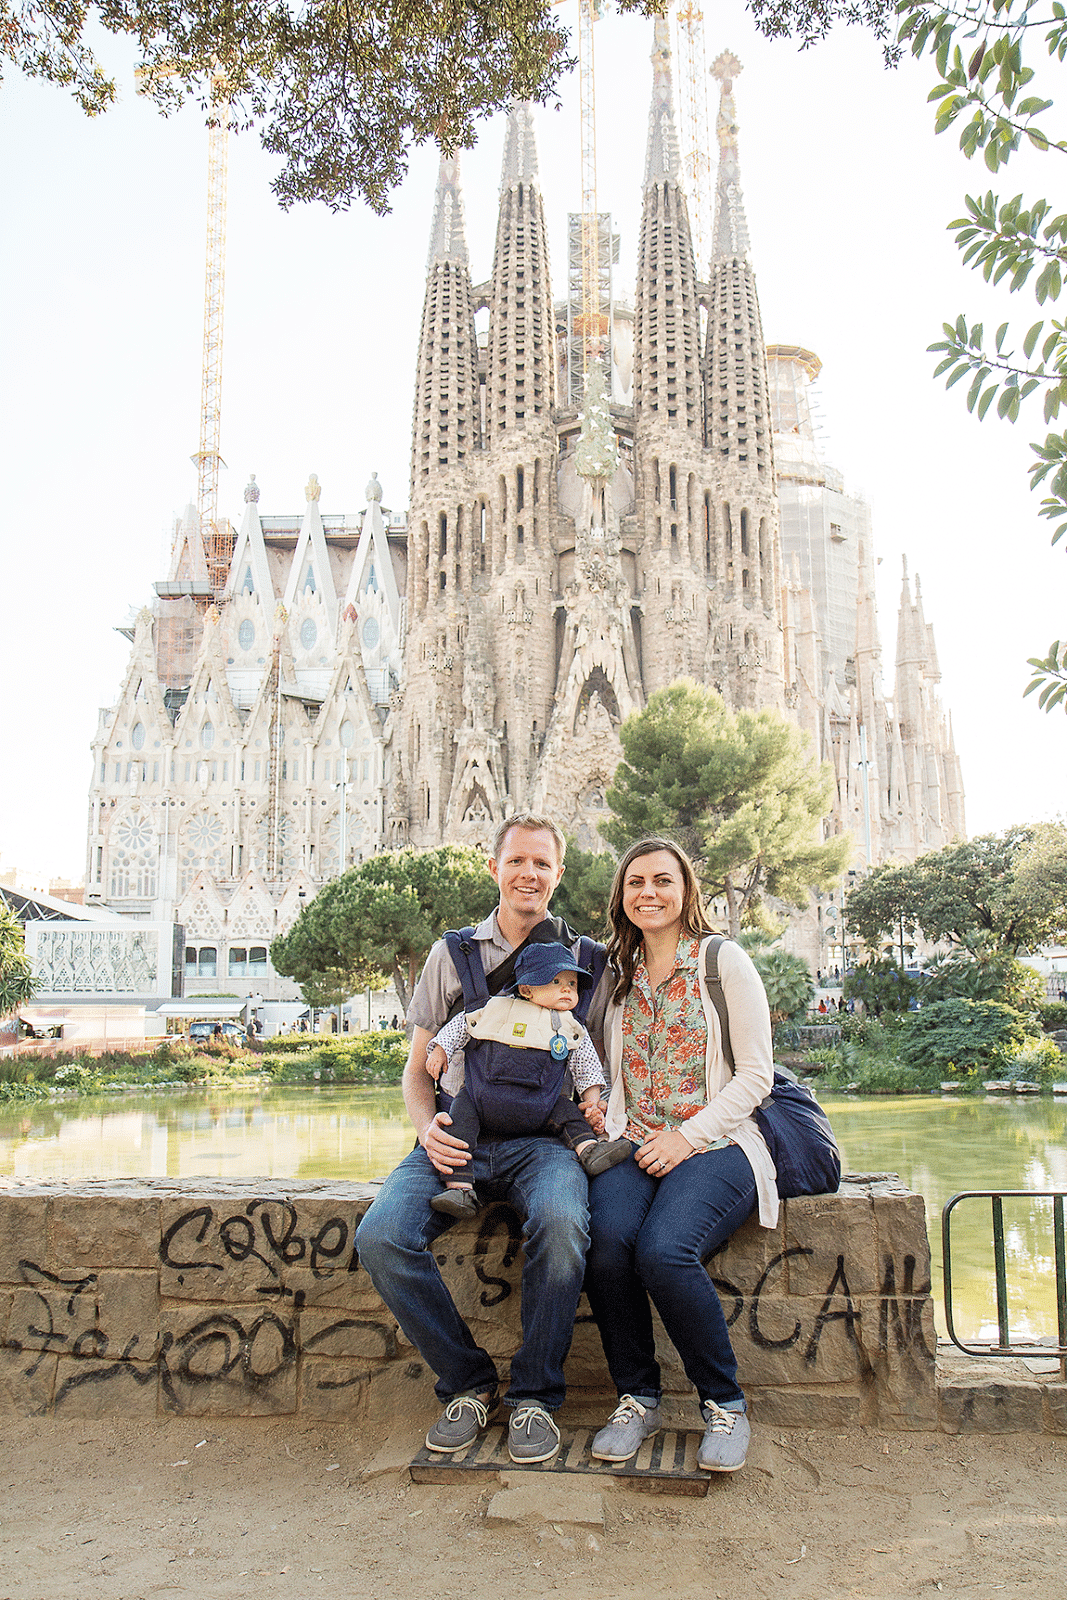 Barcelona: 10 Tips for Visiting La Sagrada Familia